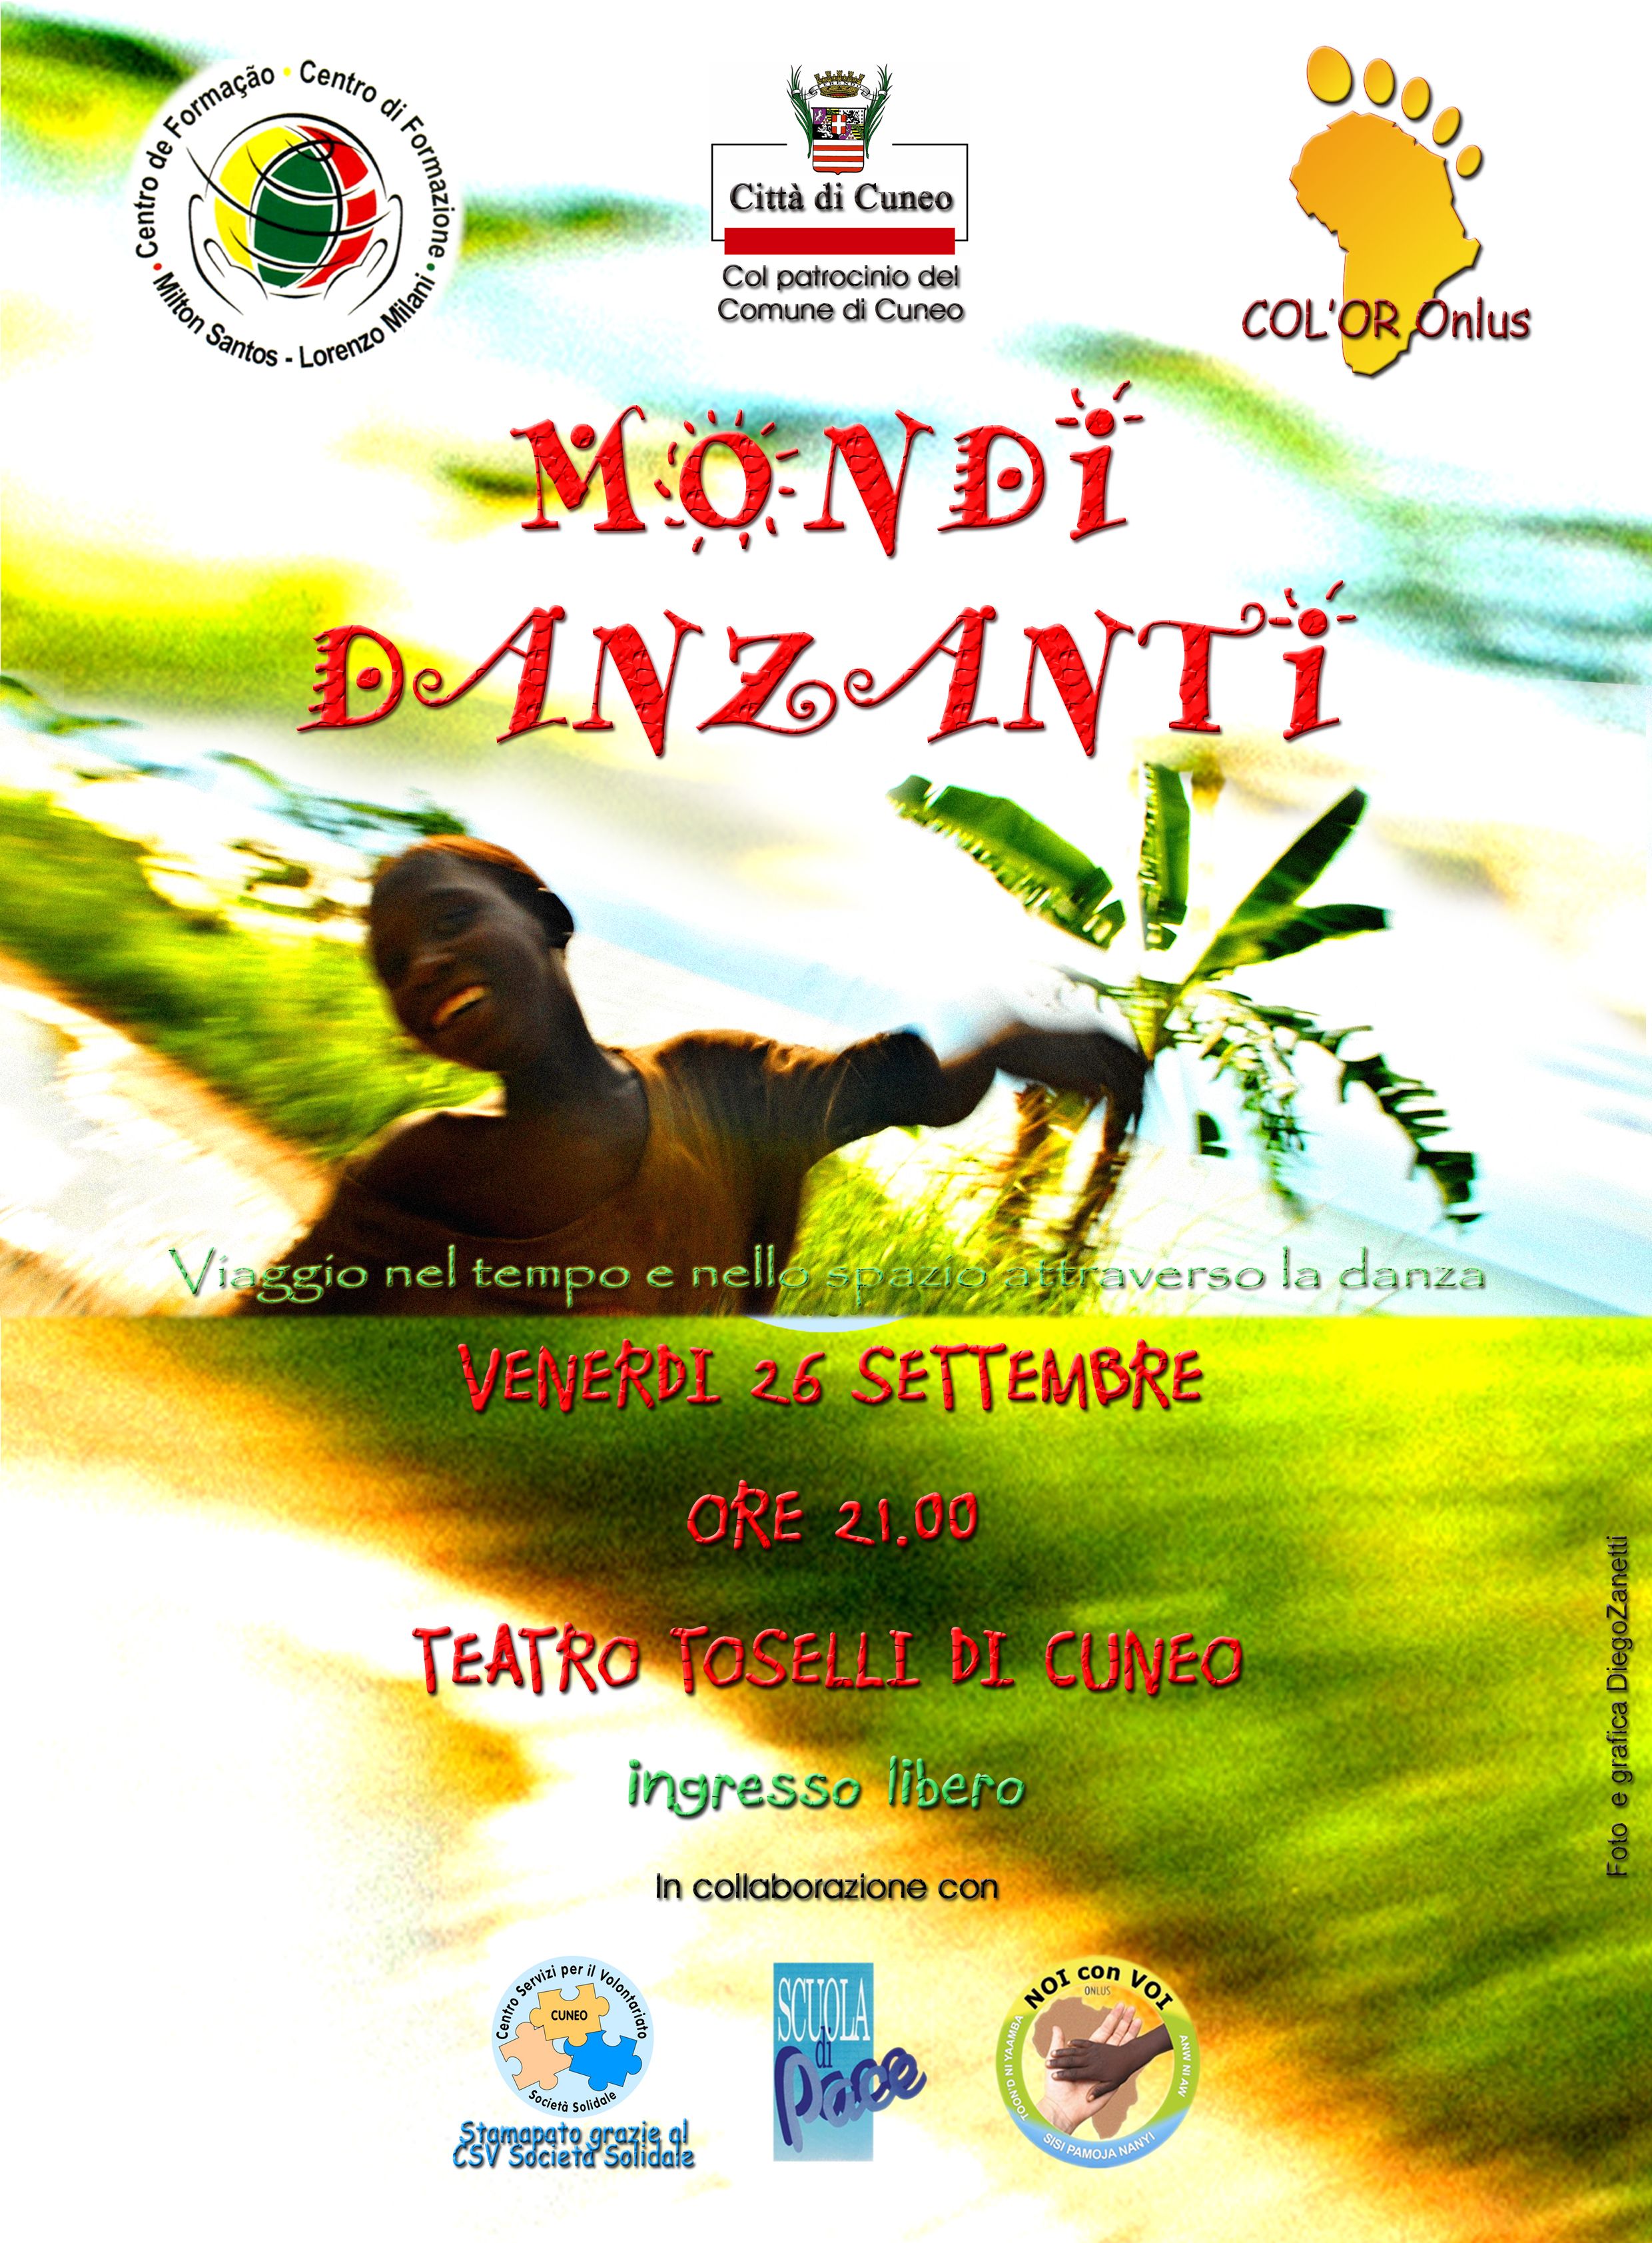 26 settembre 2009: "Mondi Danzanti"